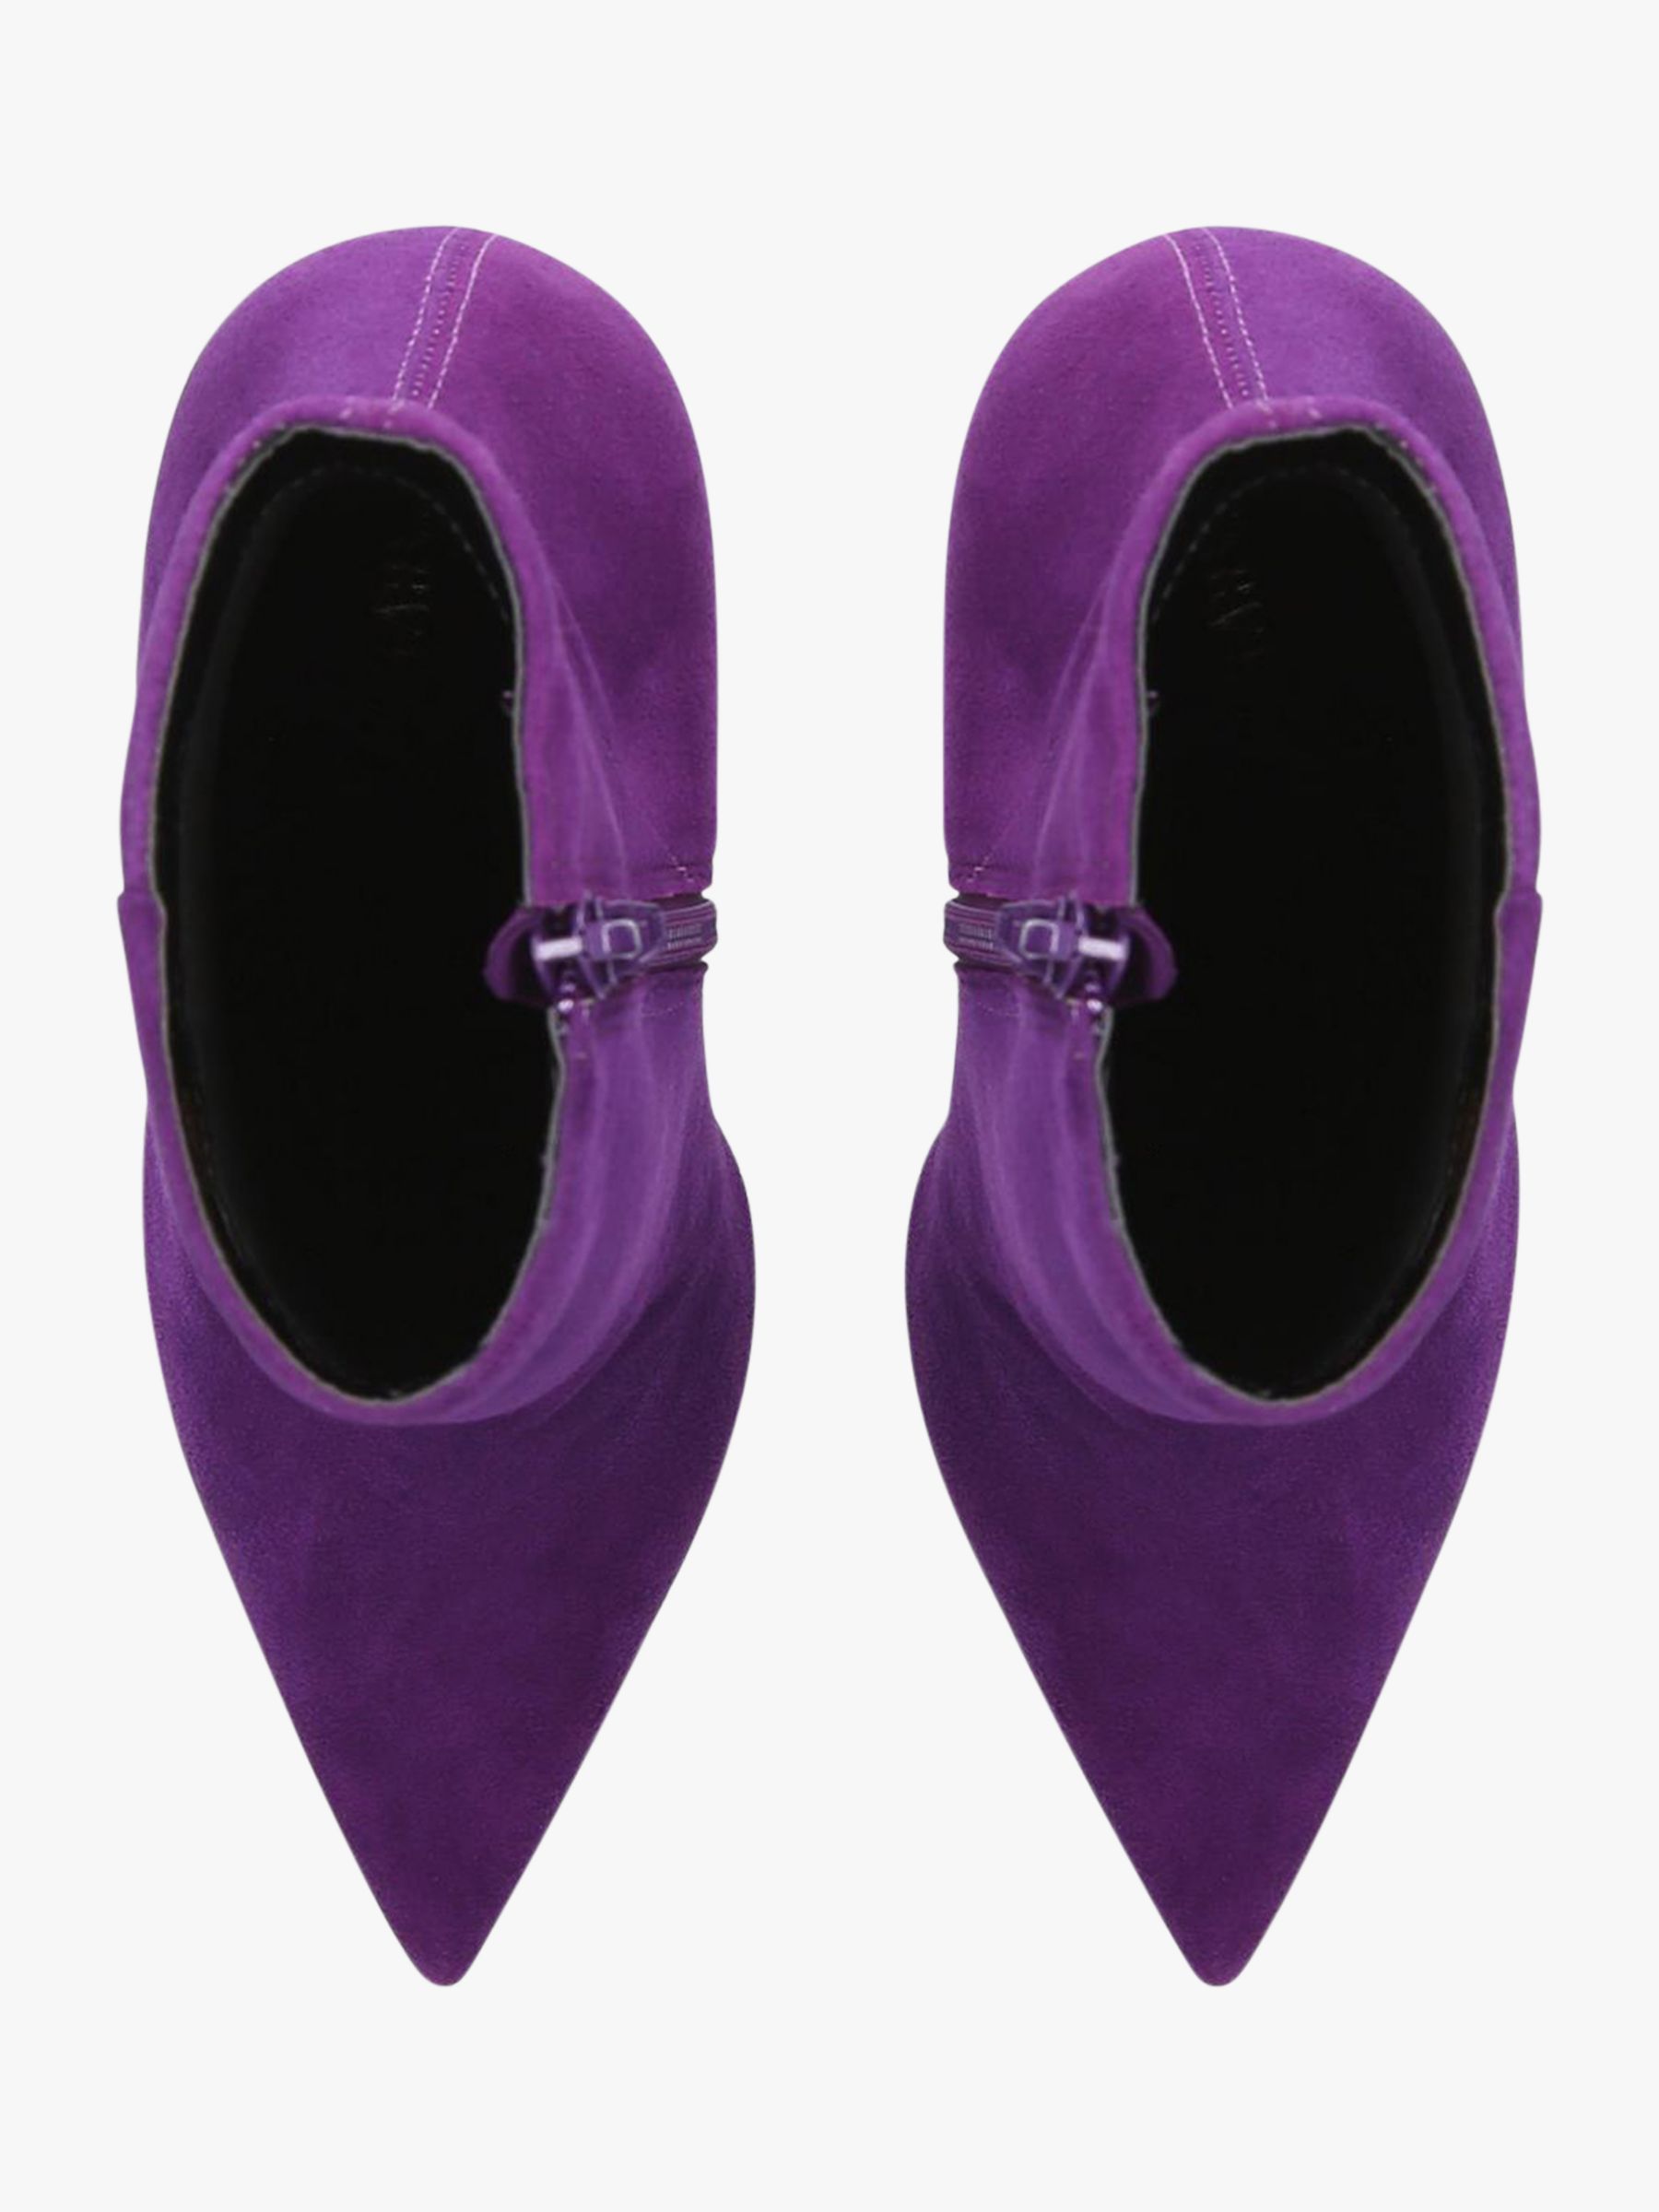 carvela purple boots